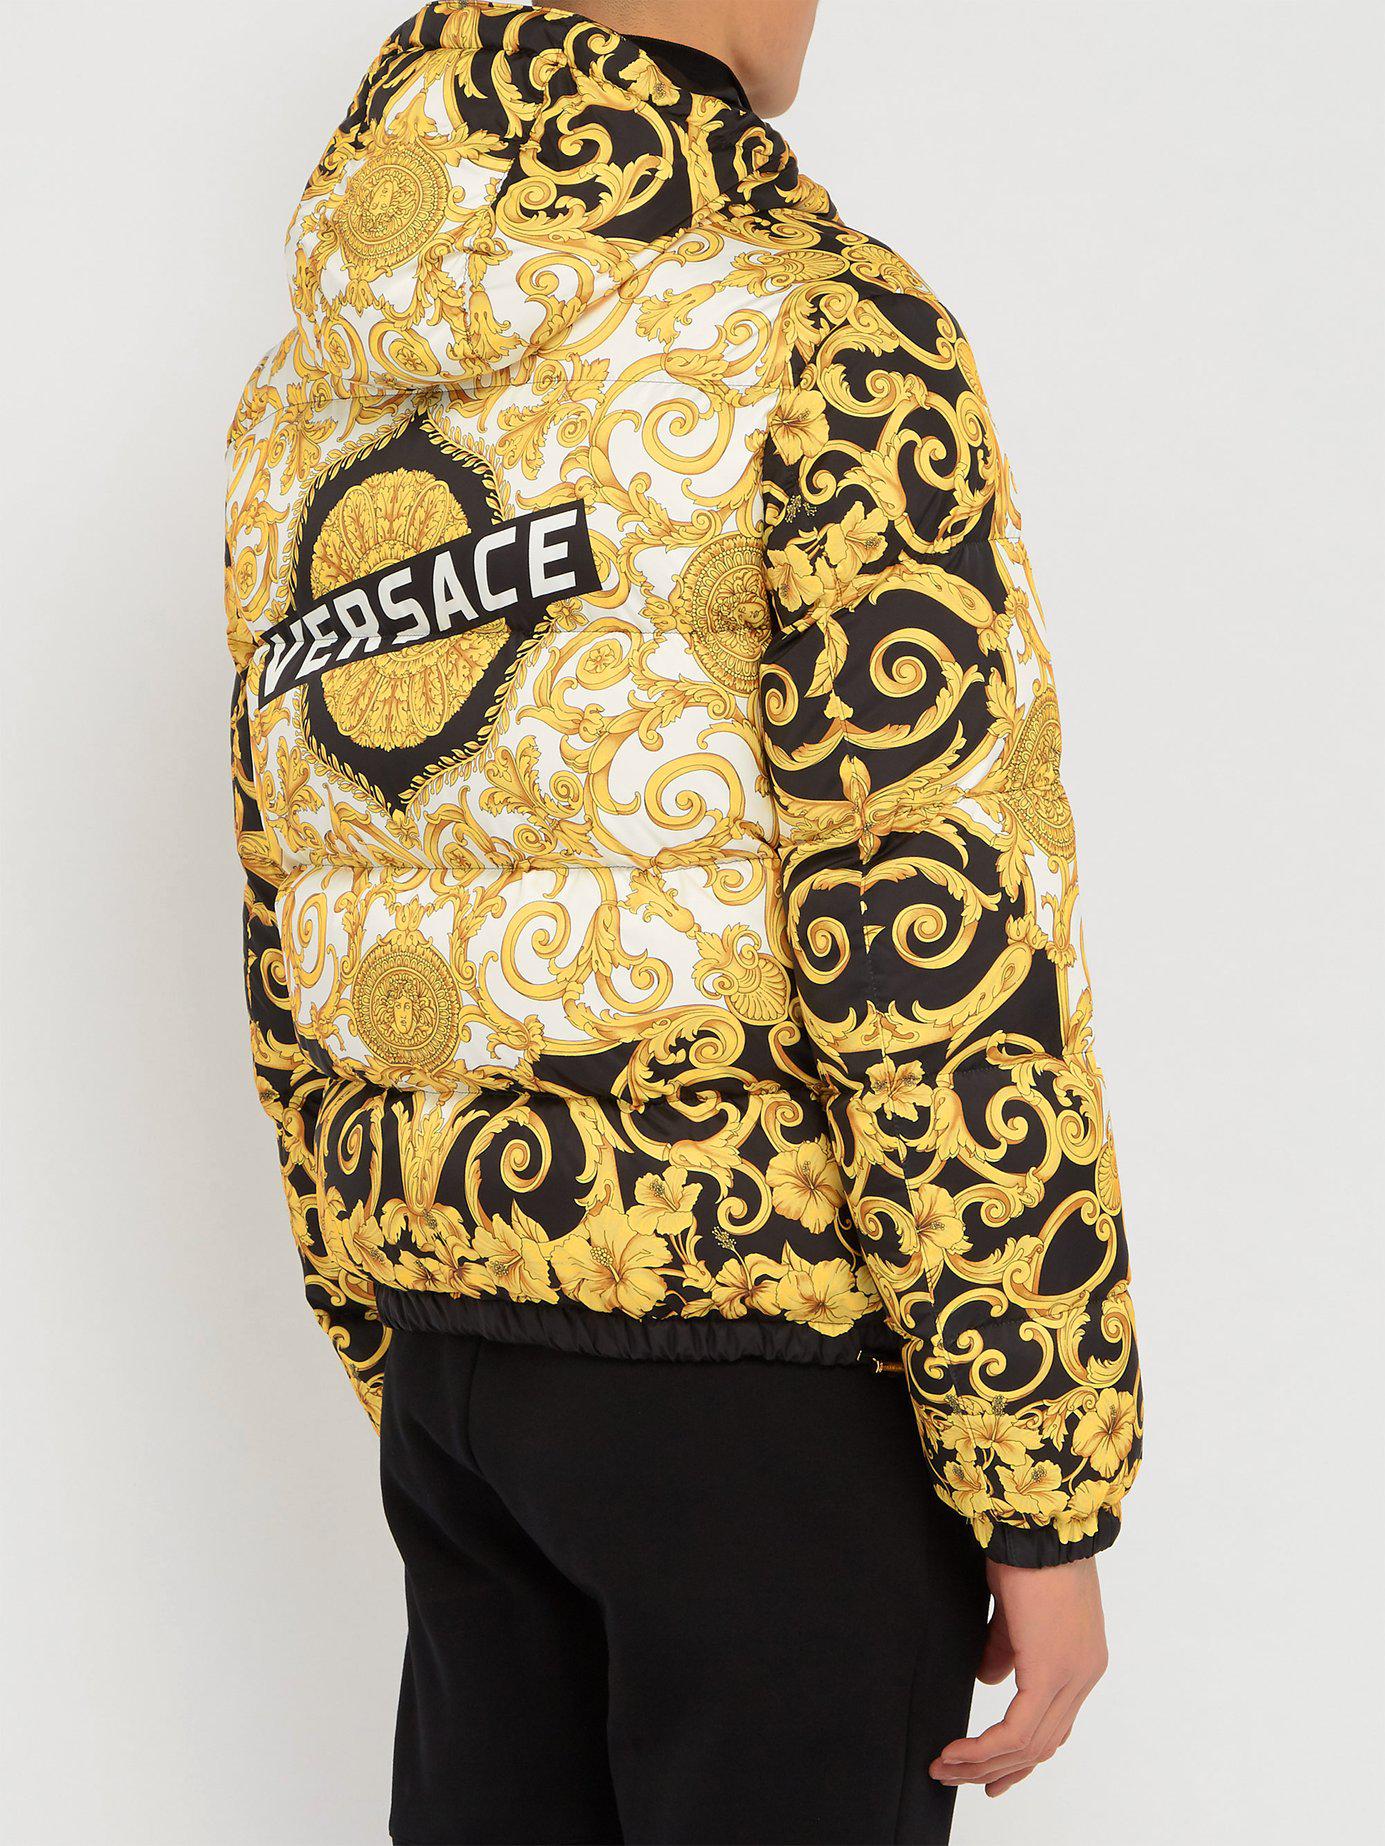 Versace Baroque Print Hooded Jacket for Men - Lyst